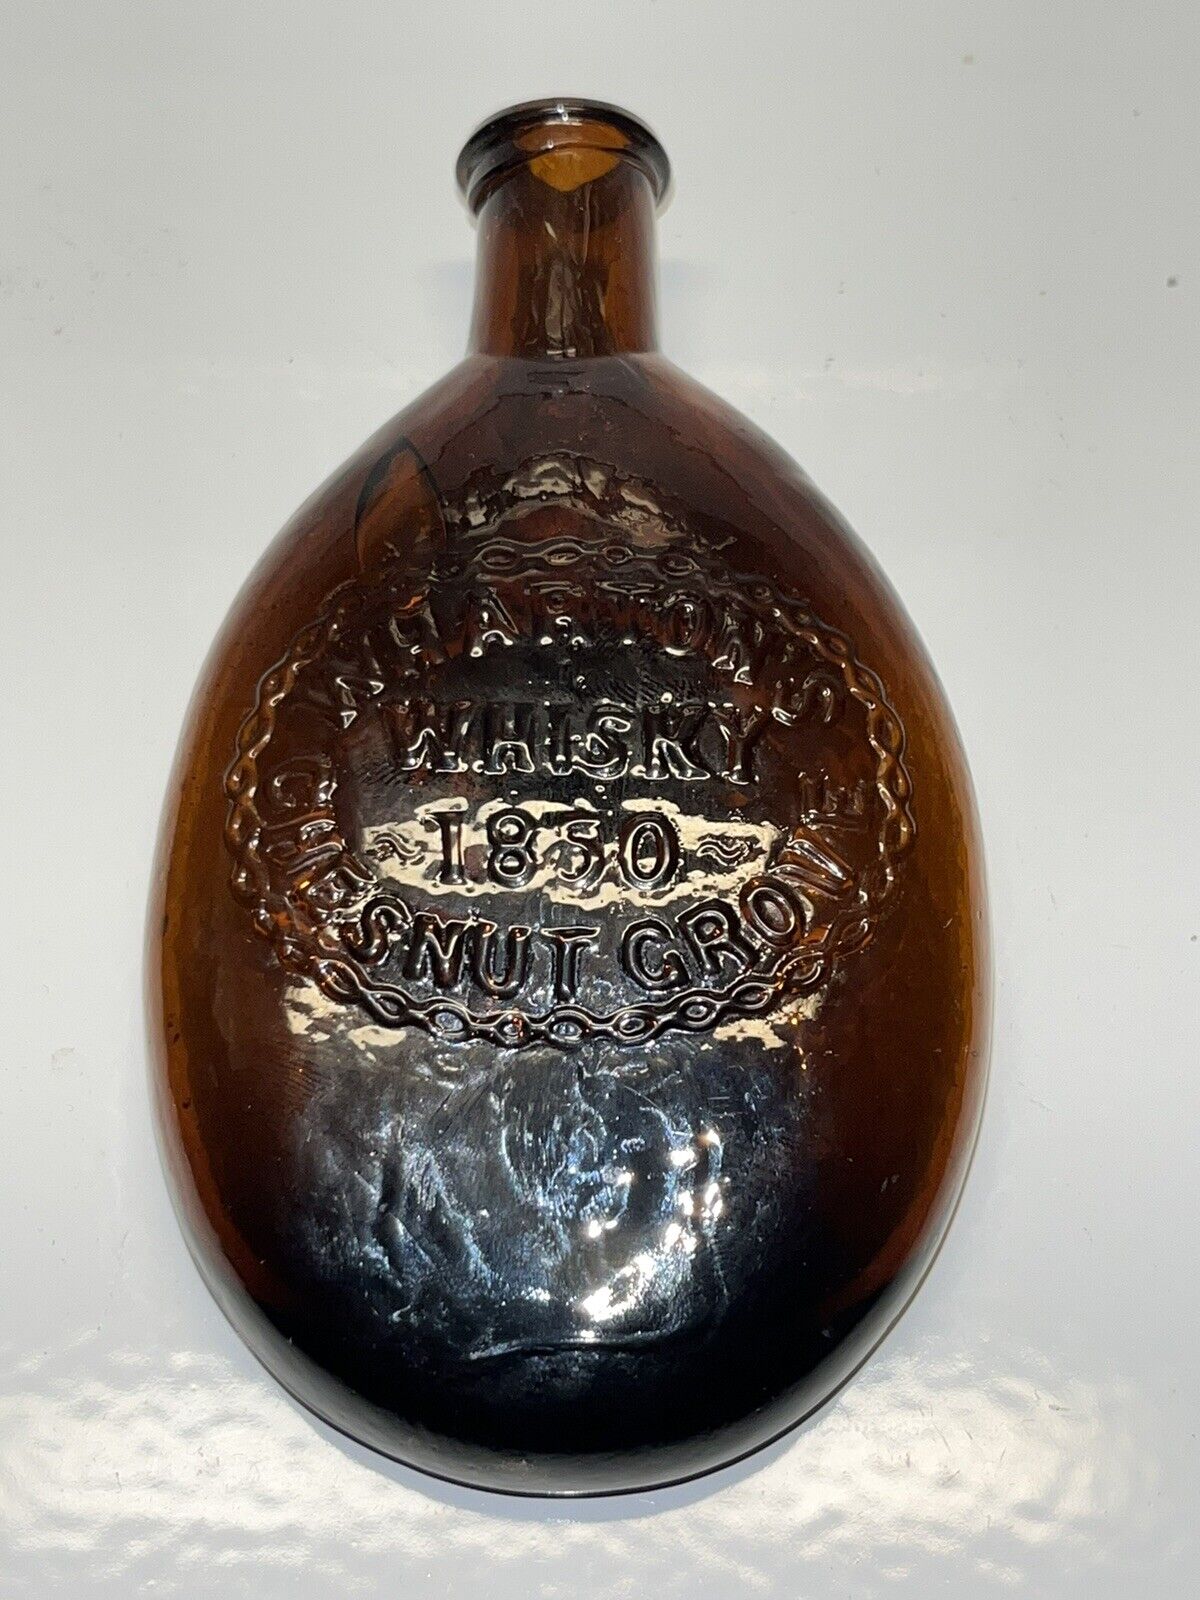 RARE Wharton\'s / Whisky / 1850 / Chesnut Grove\